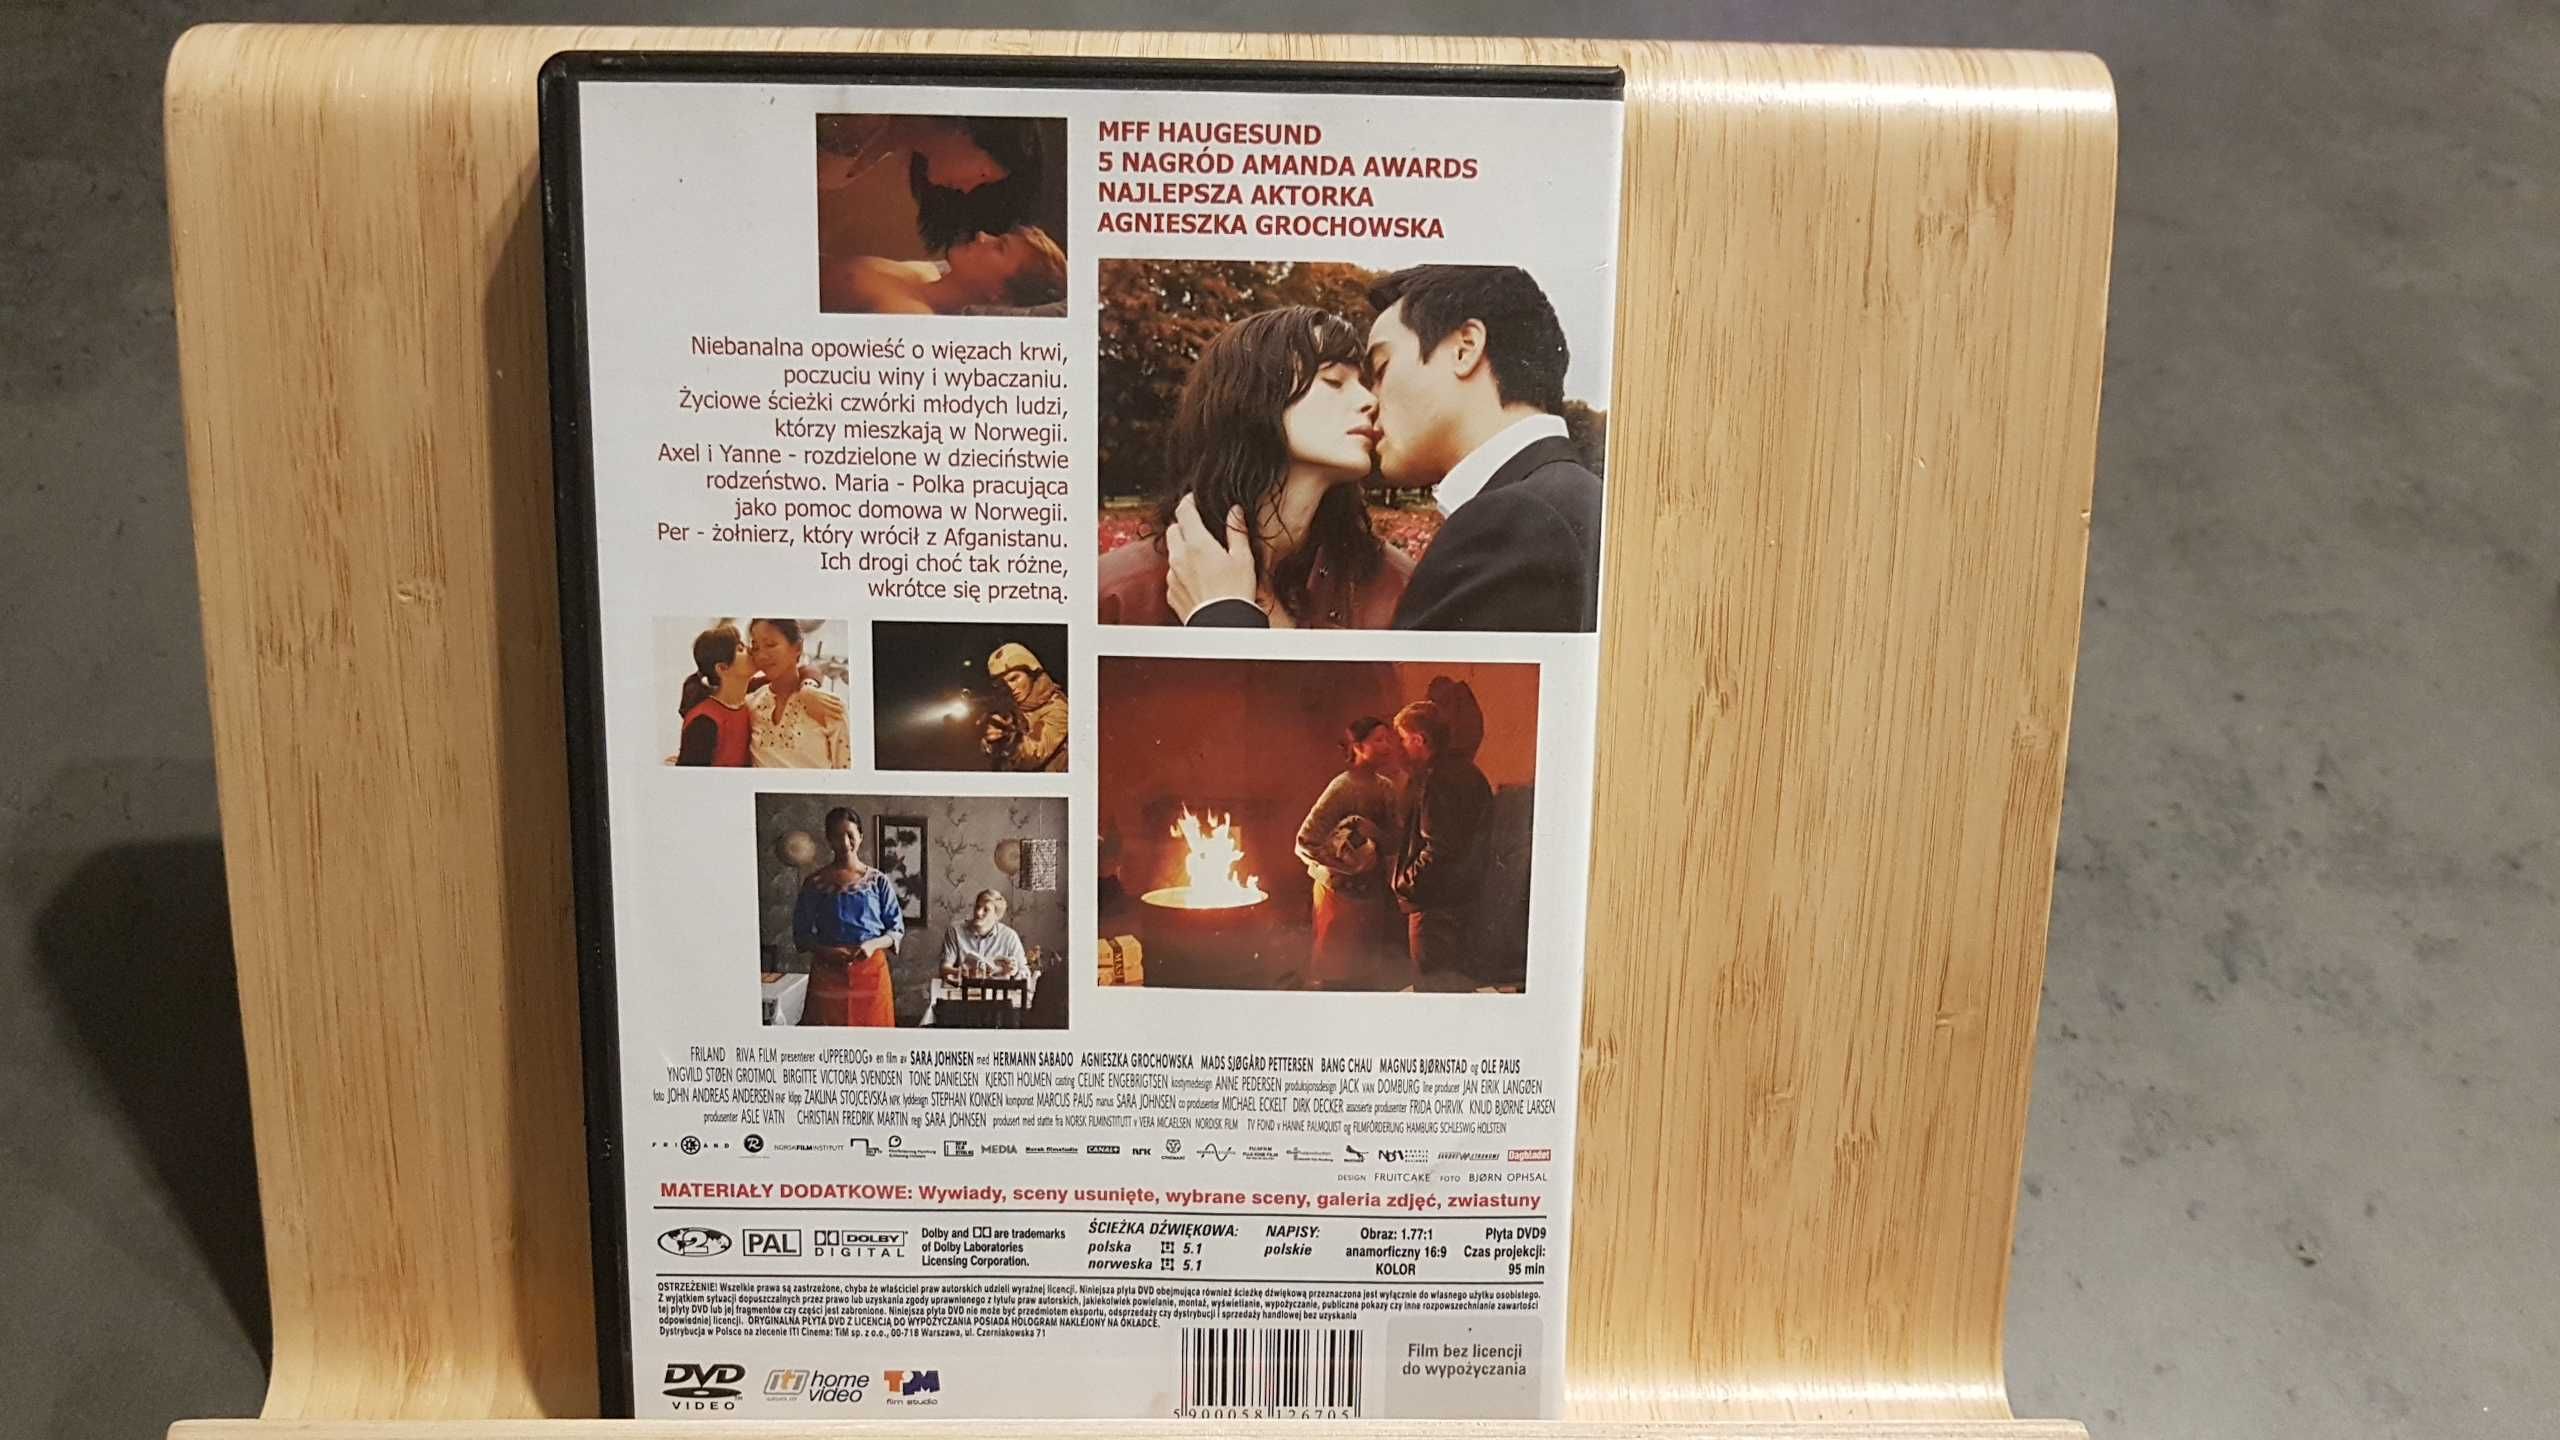 Film DVD Upperdog